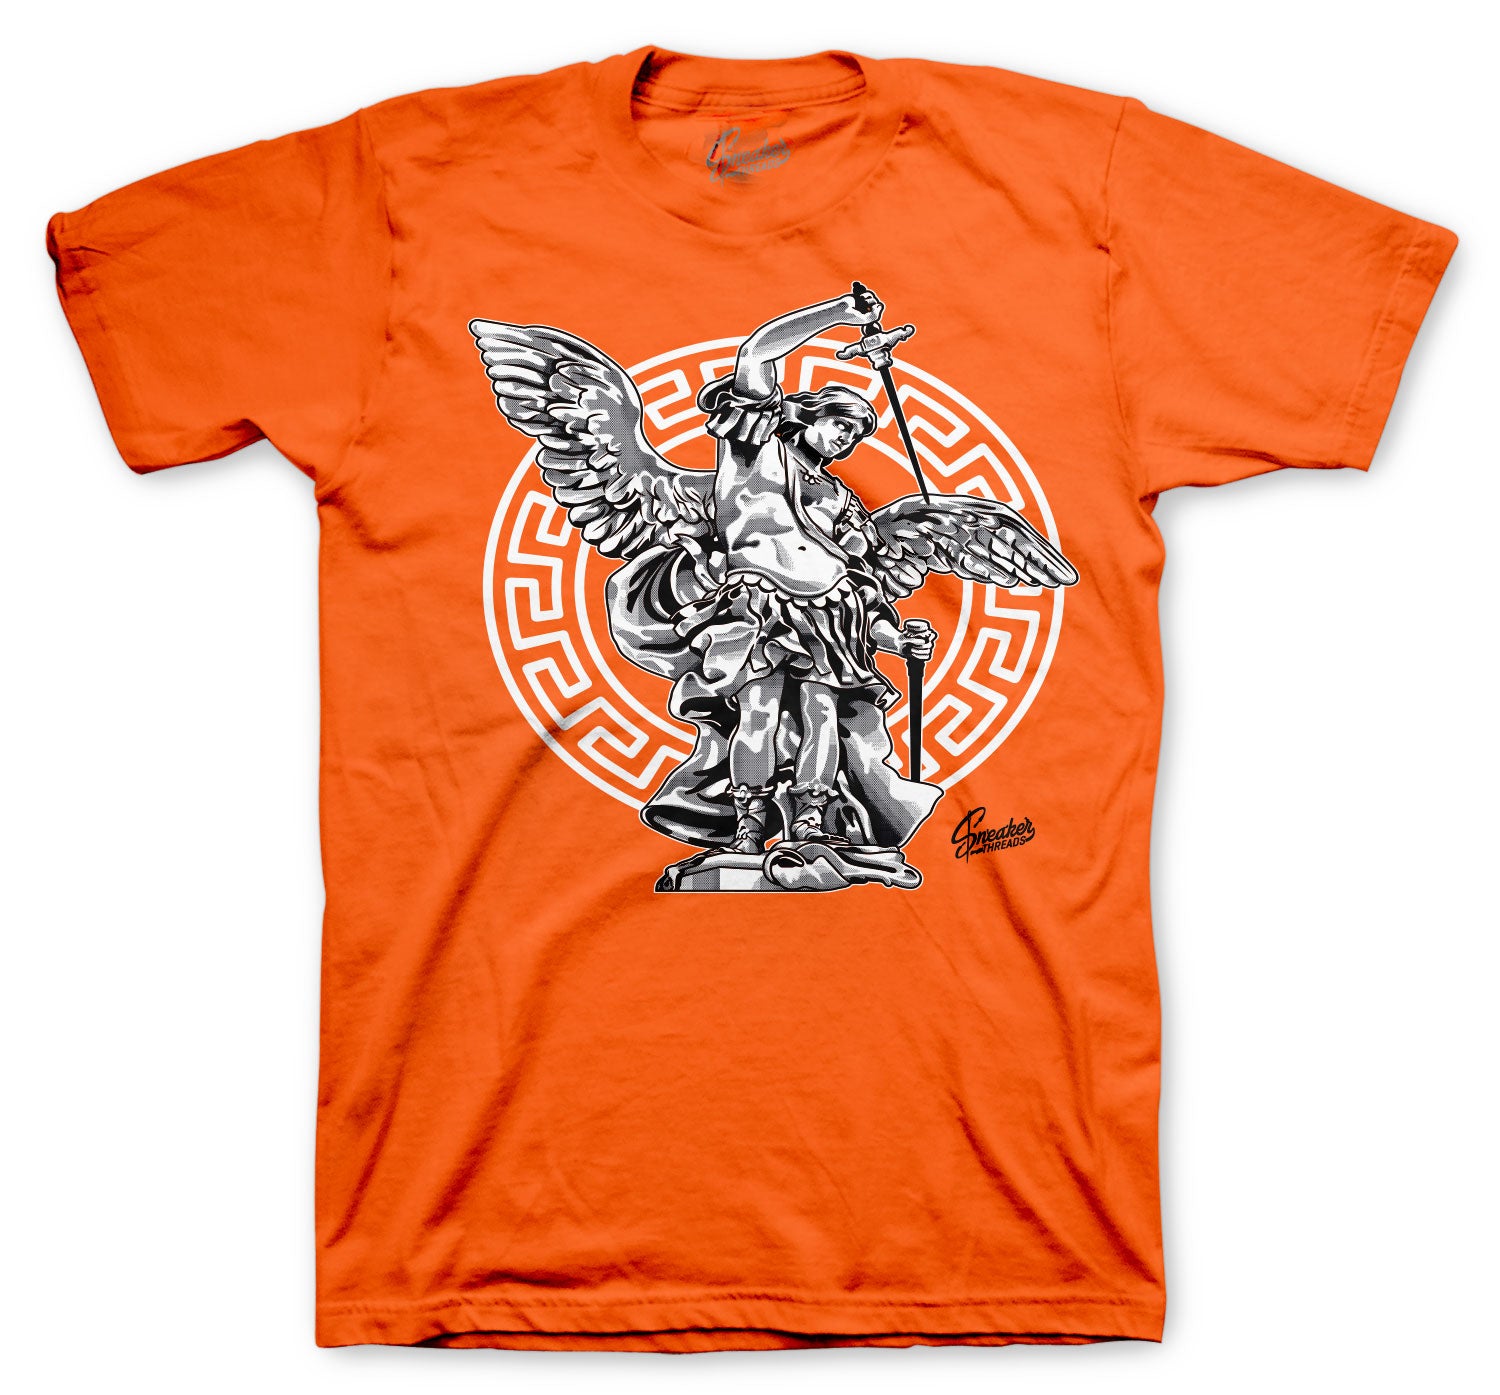 Retro 1 Electro Orange Shirt - St. Michael - Orange